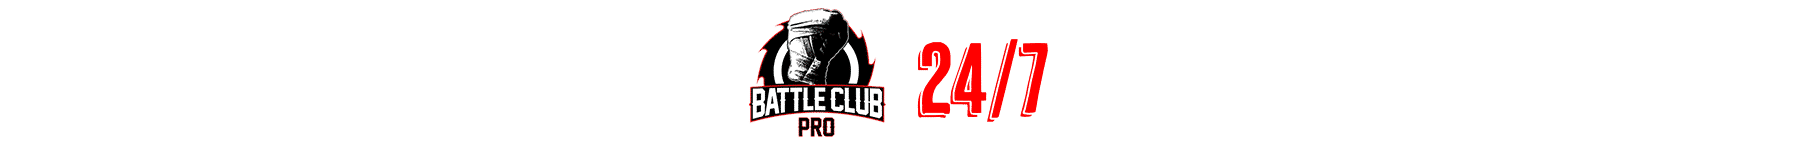 Battle Club Pro 247 Logo 1800x150 New Font